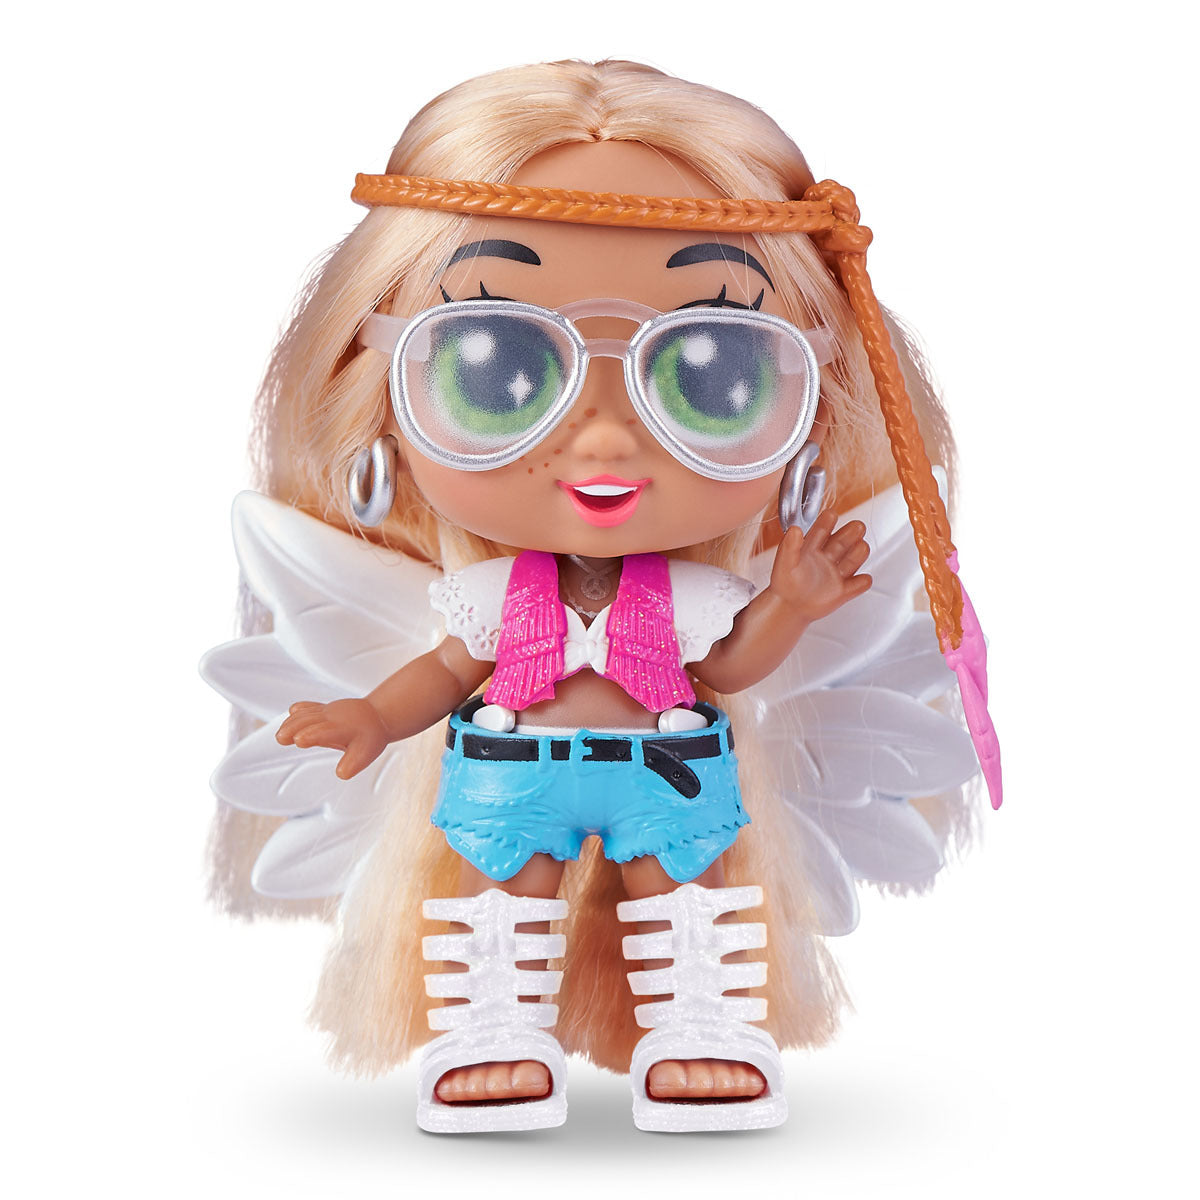 Itty Bitty Prettys: Angel High Capsule Doll by ZURU (Styles Vary - One Supplied)